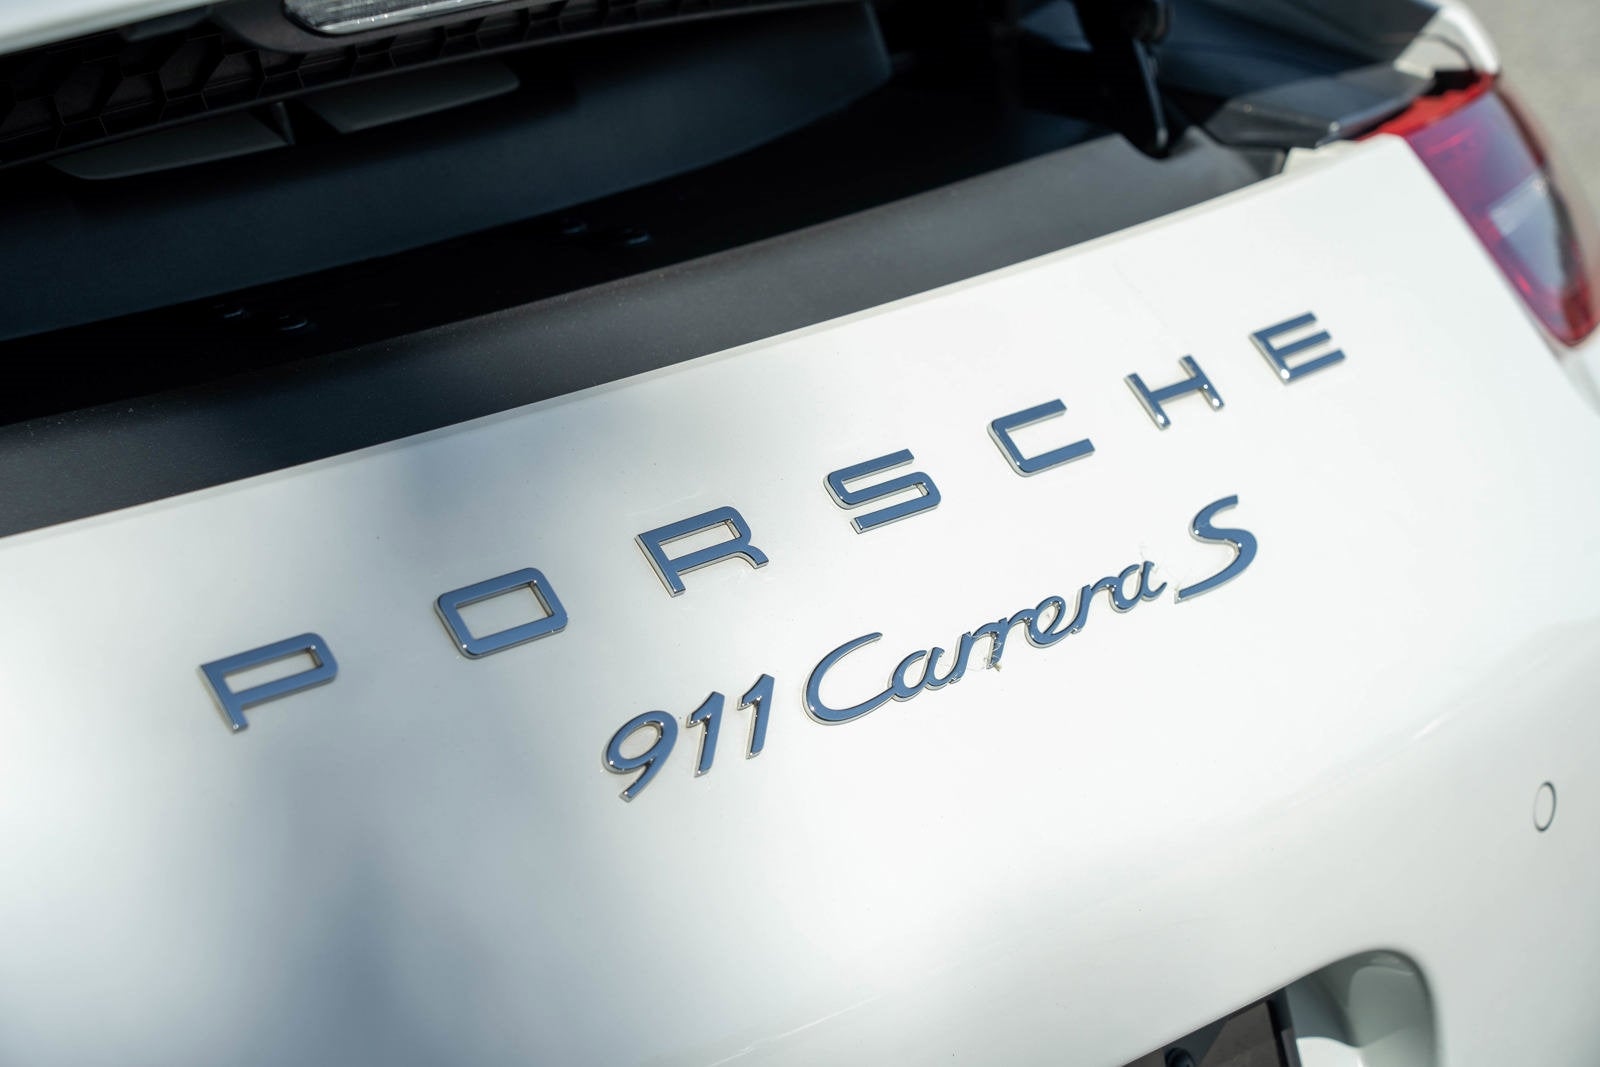 2016 Porsche 911 Carrera S